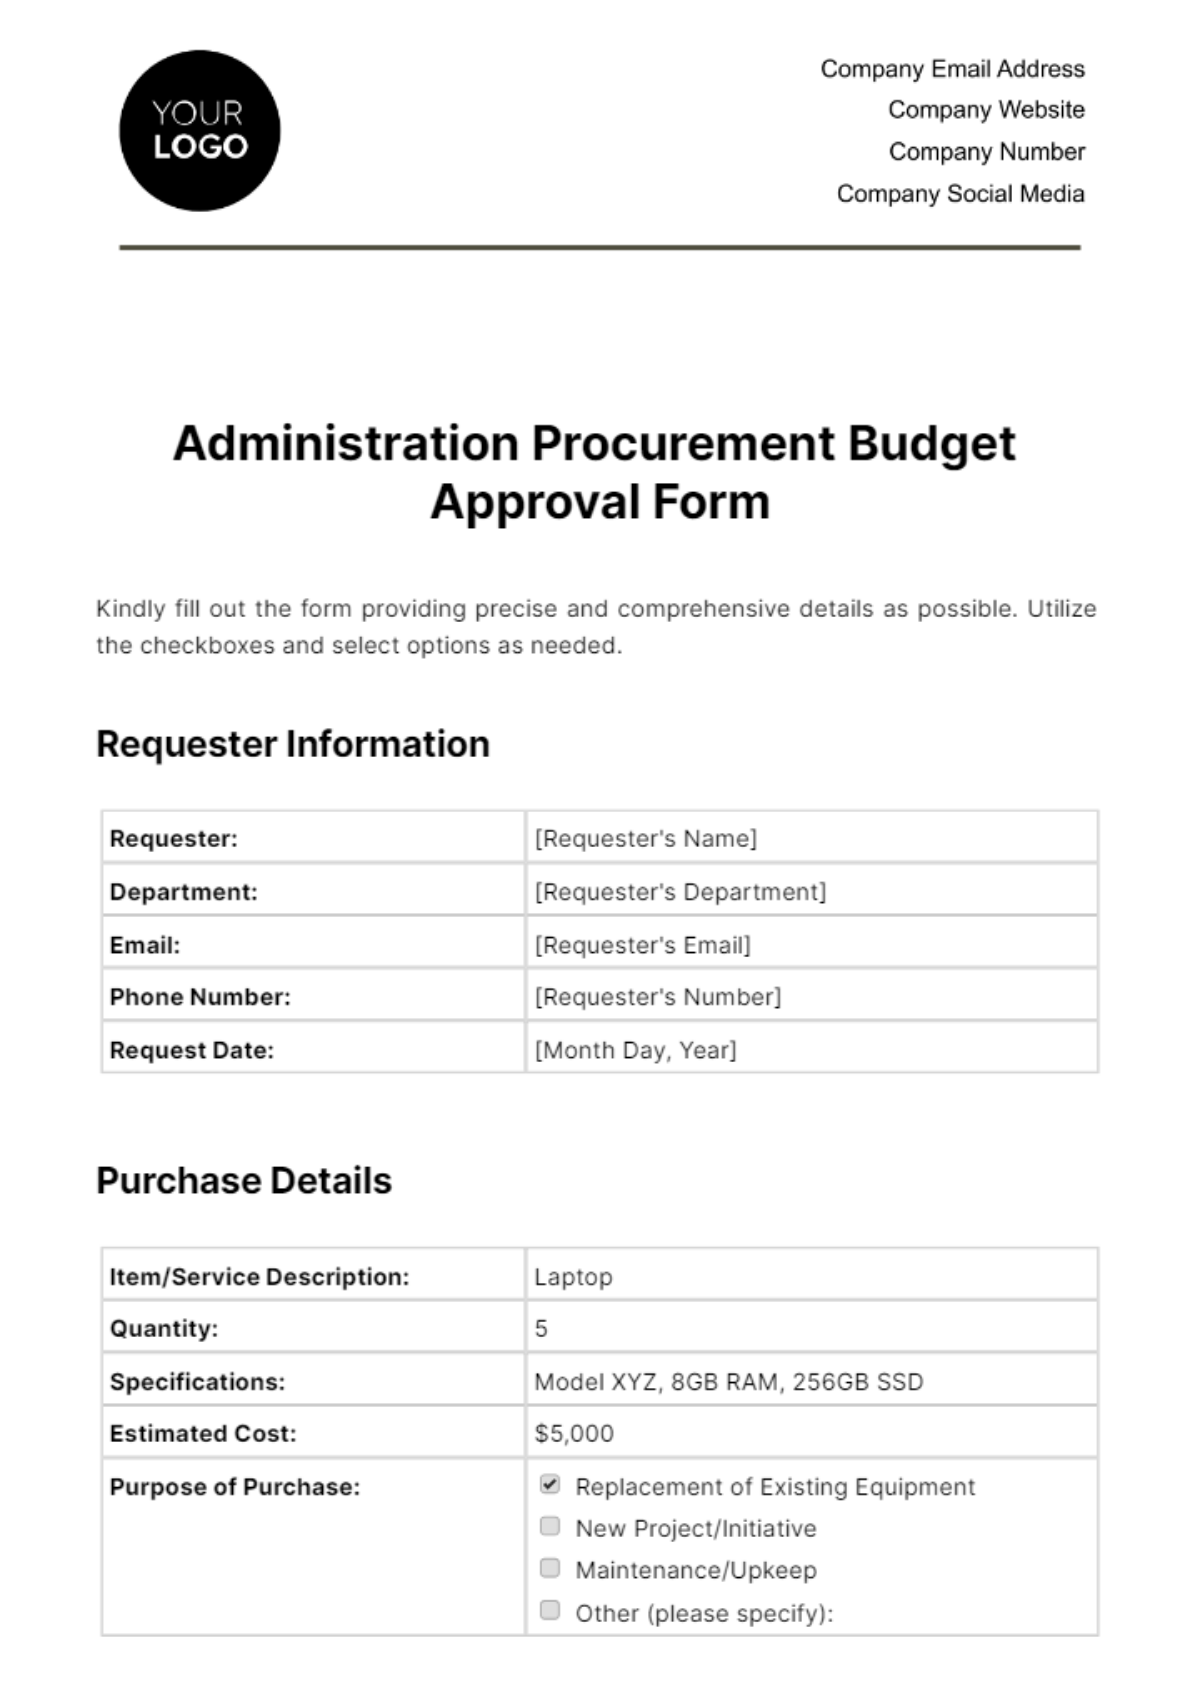 Administration Procurement Budget Approval Form Template